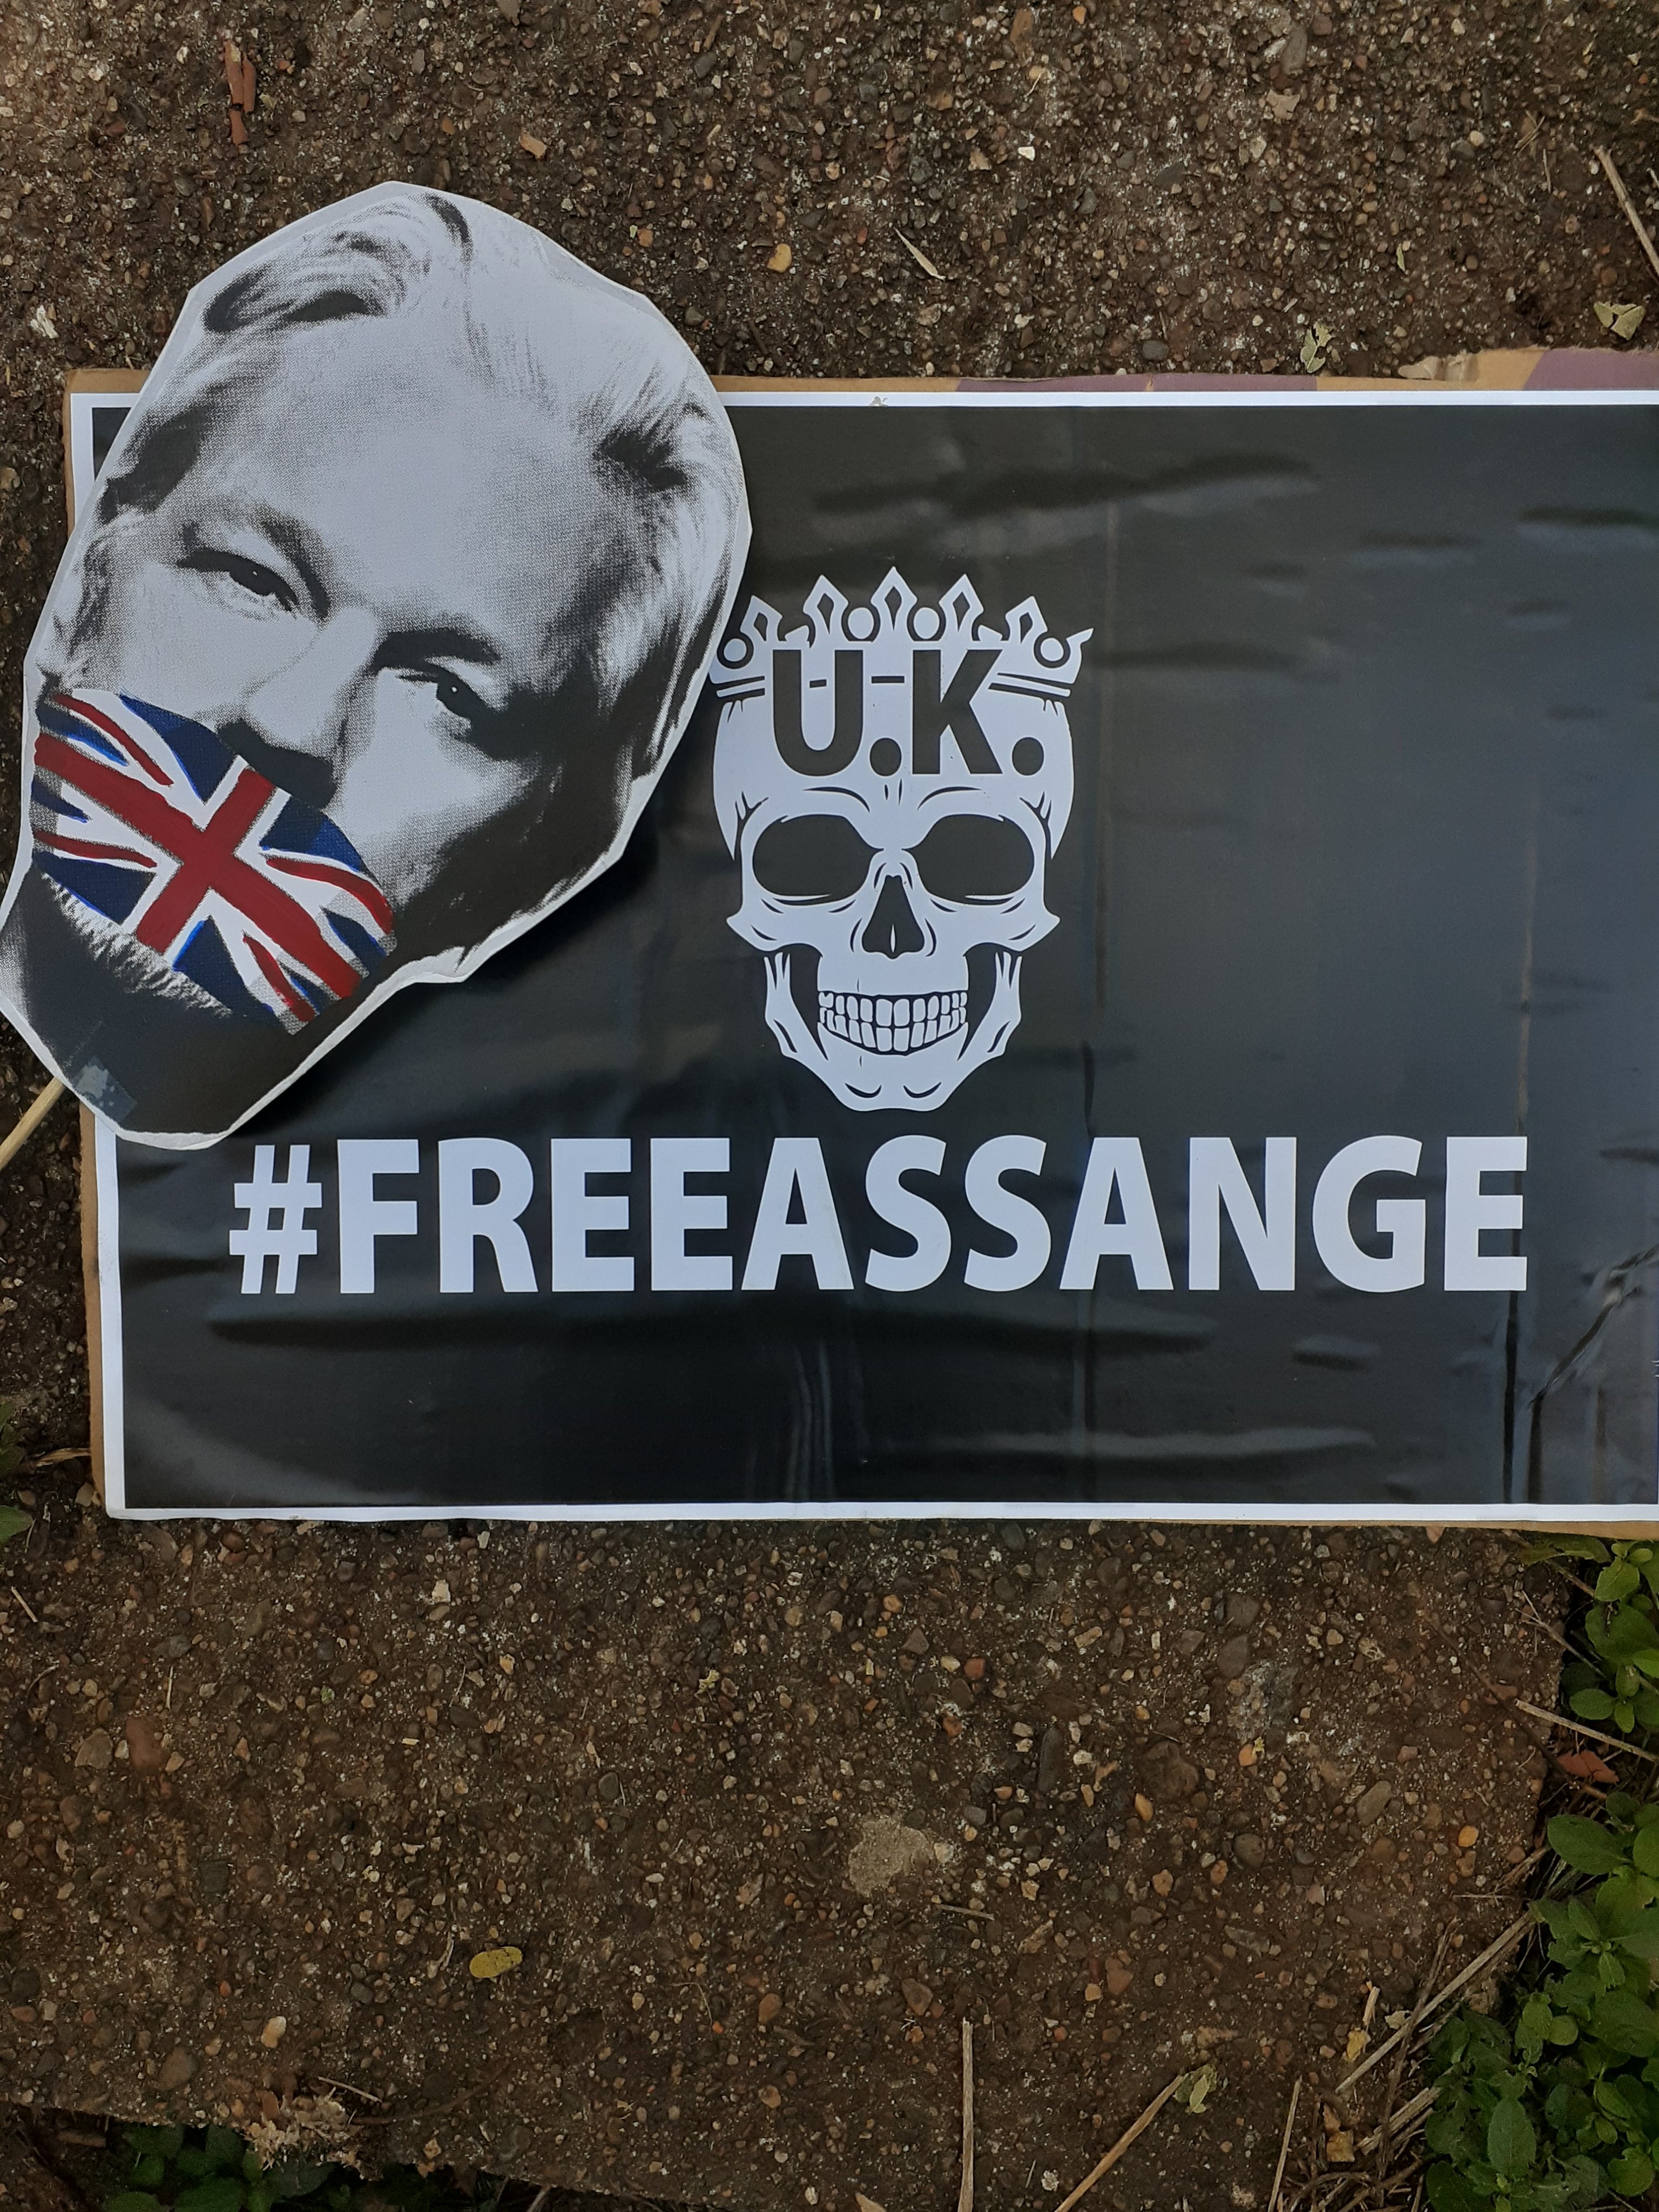 street_art:uk-free-assange-sept20.jpeg